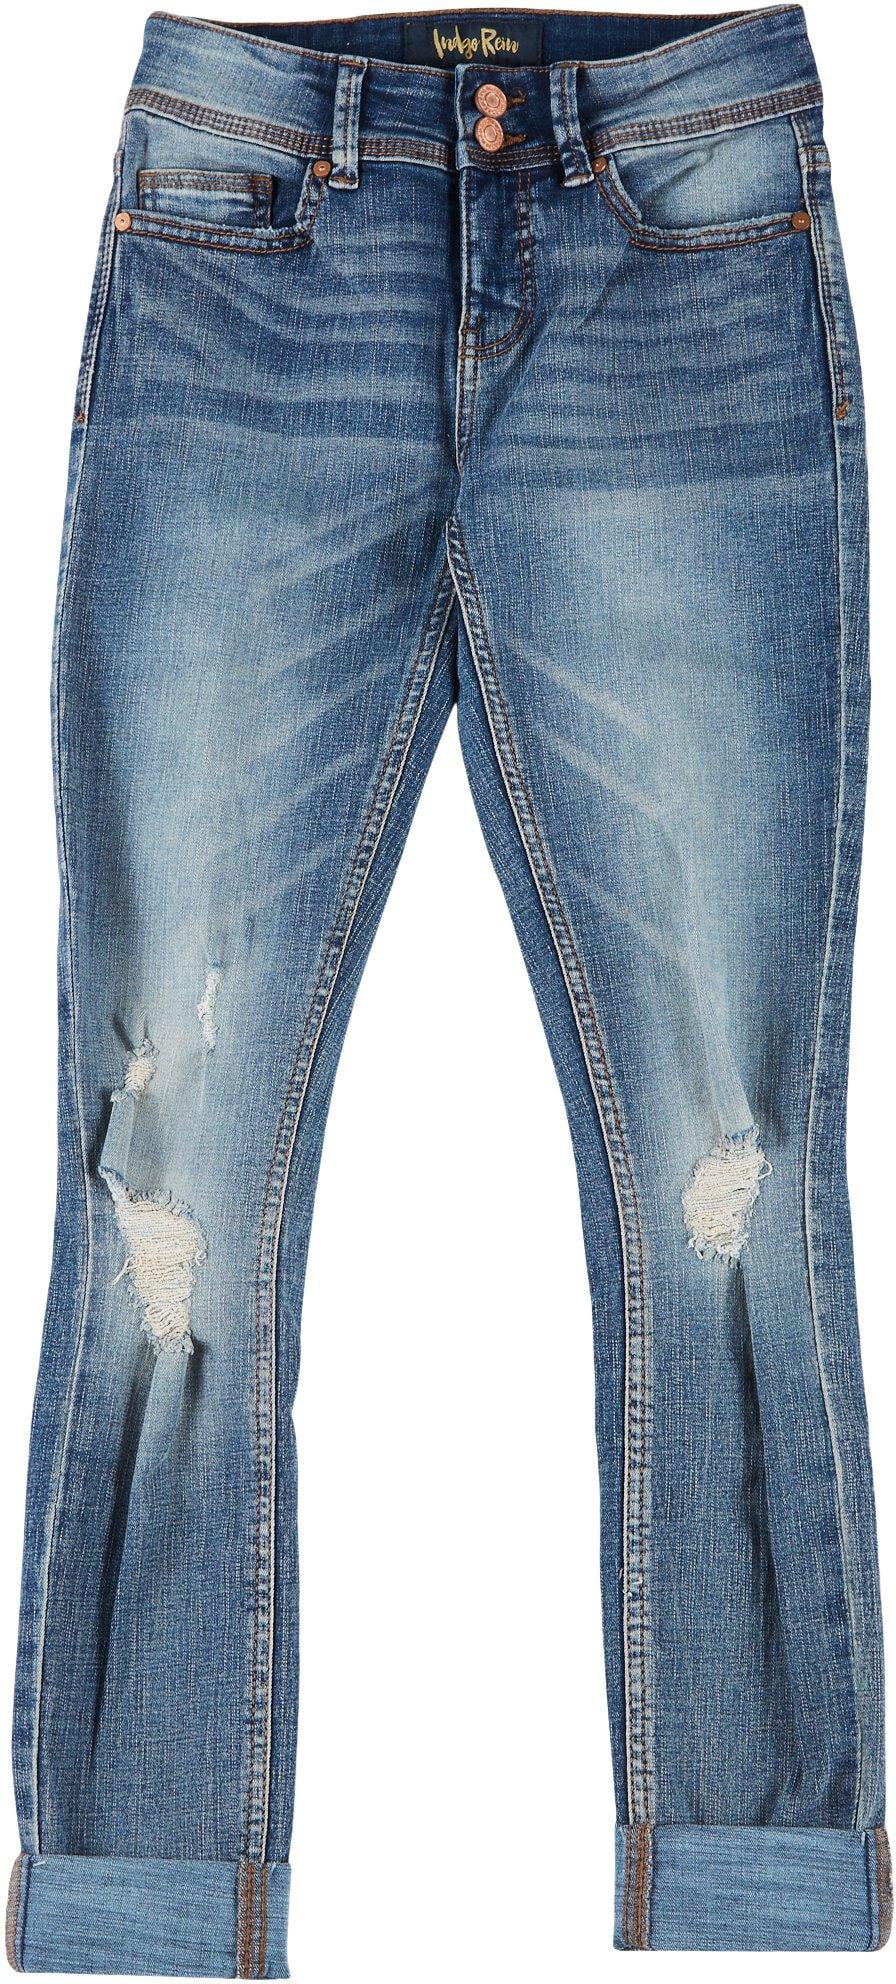 indigo rein ripped jeans